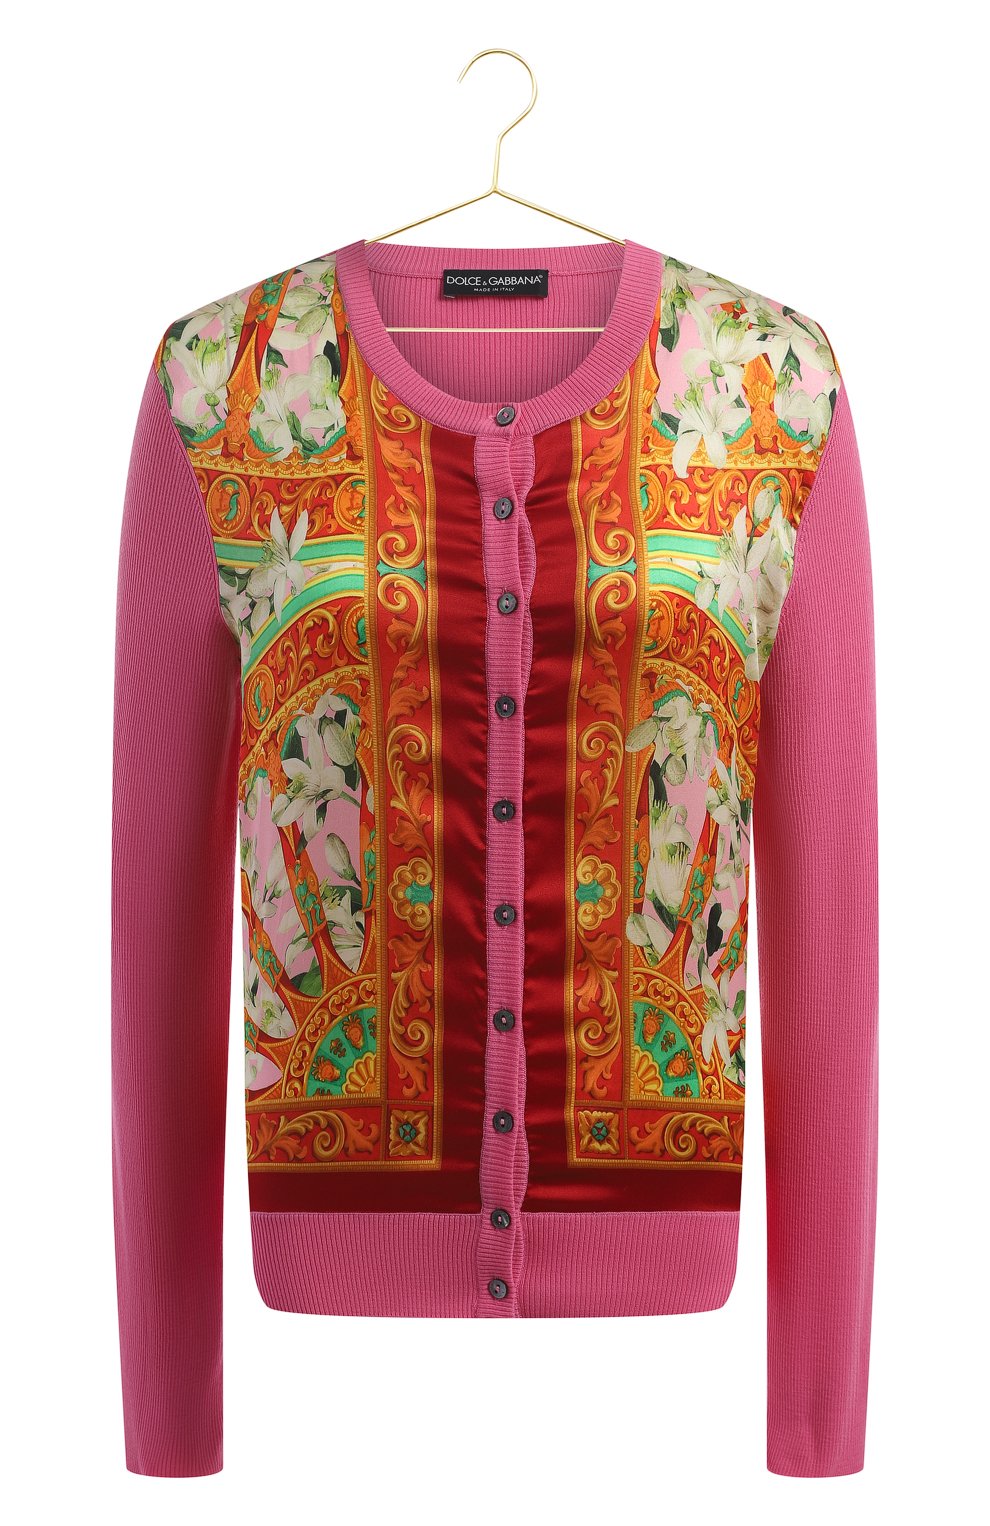 Кардиган из шерсти и шелка | Dolce & Gabbana | Розовый - 1